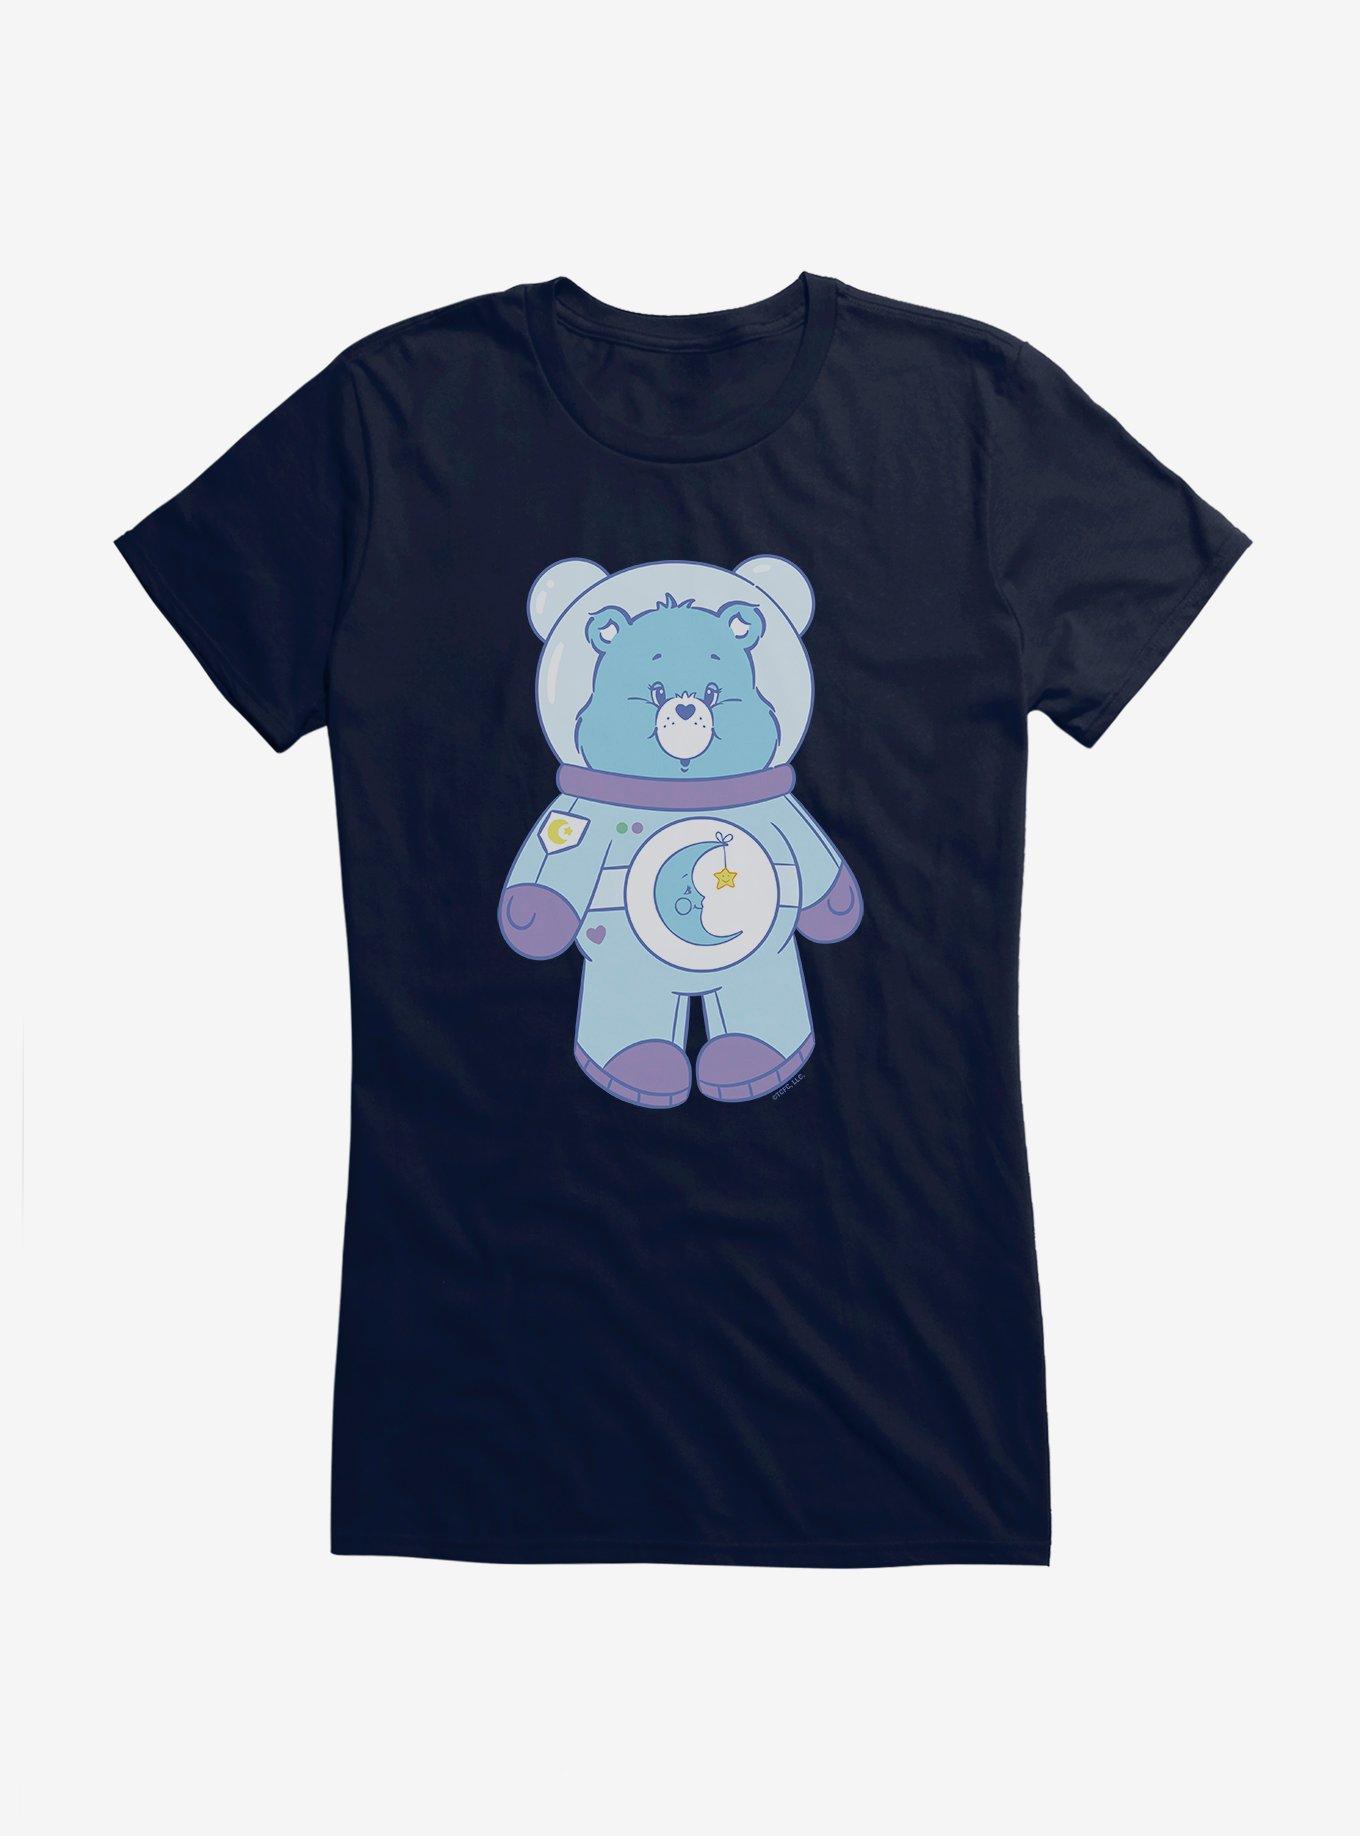 Care Bears Bedtime Bear Space Suit Girls T-Shirt